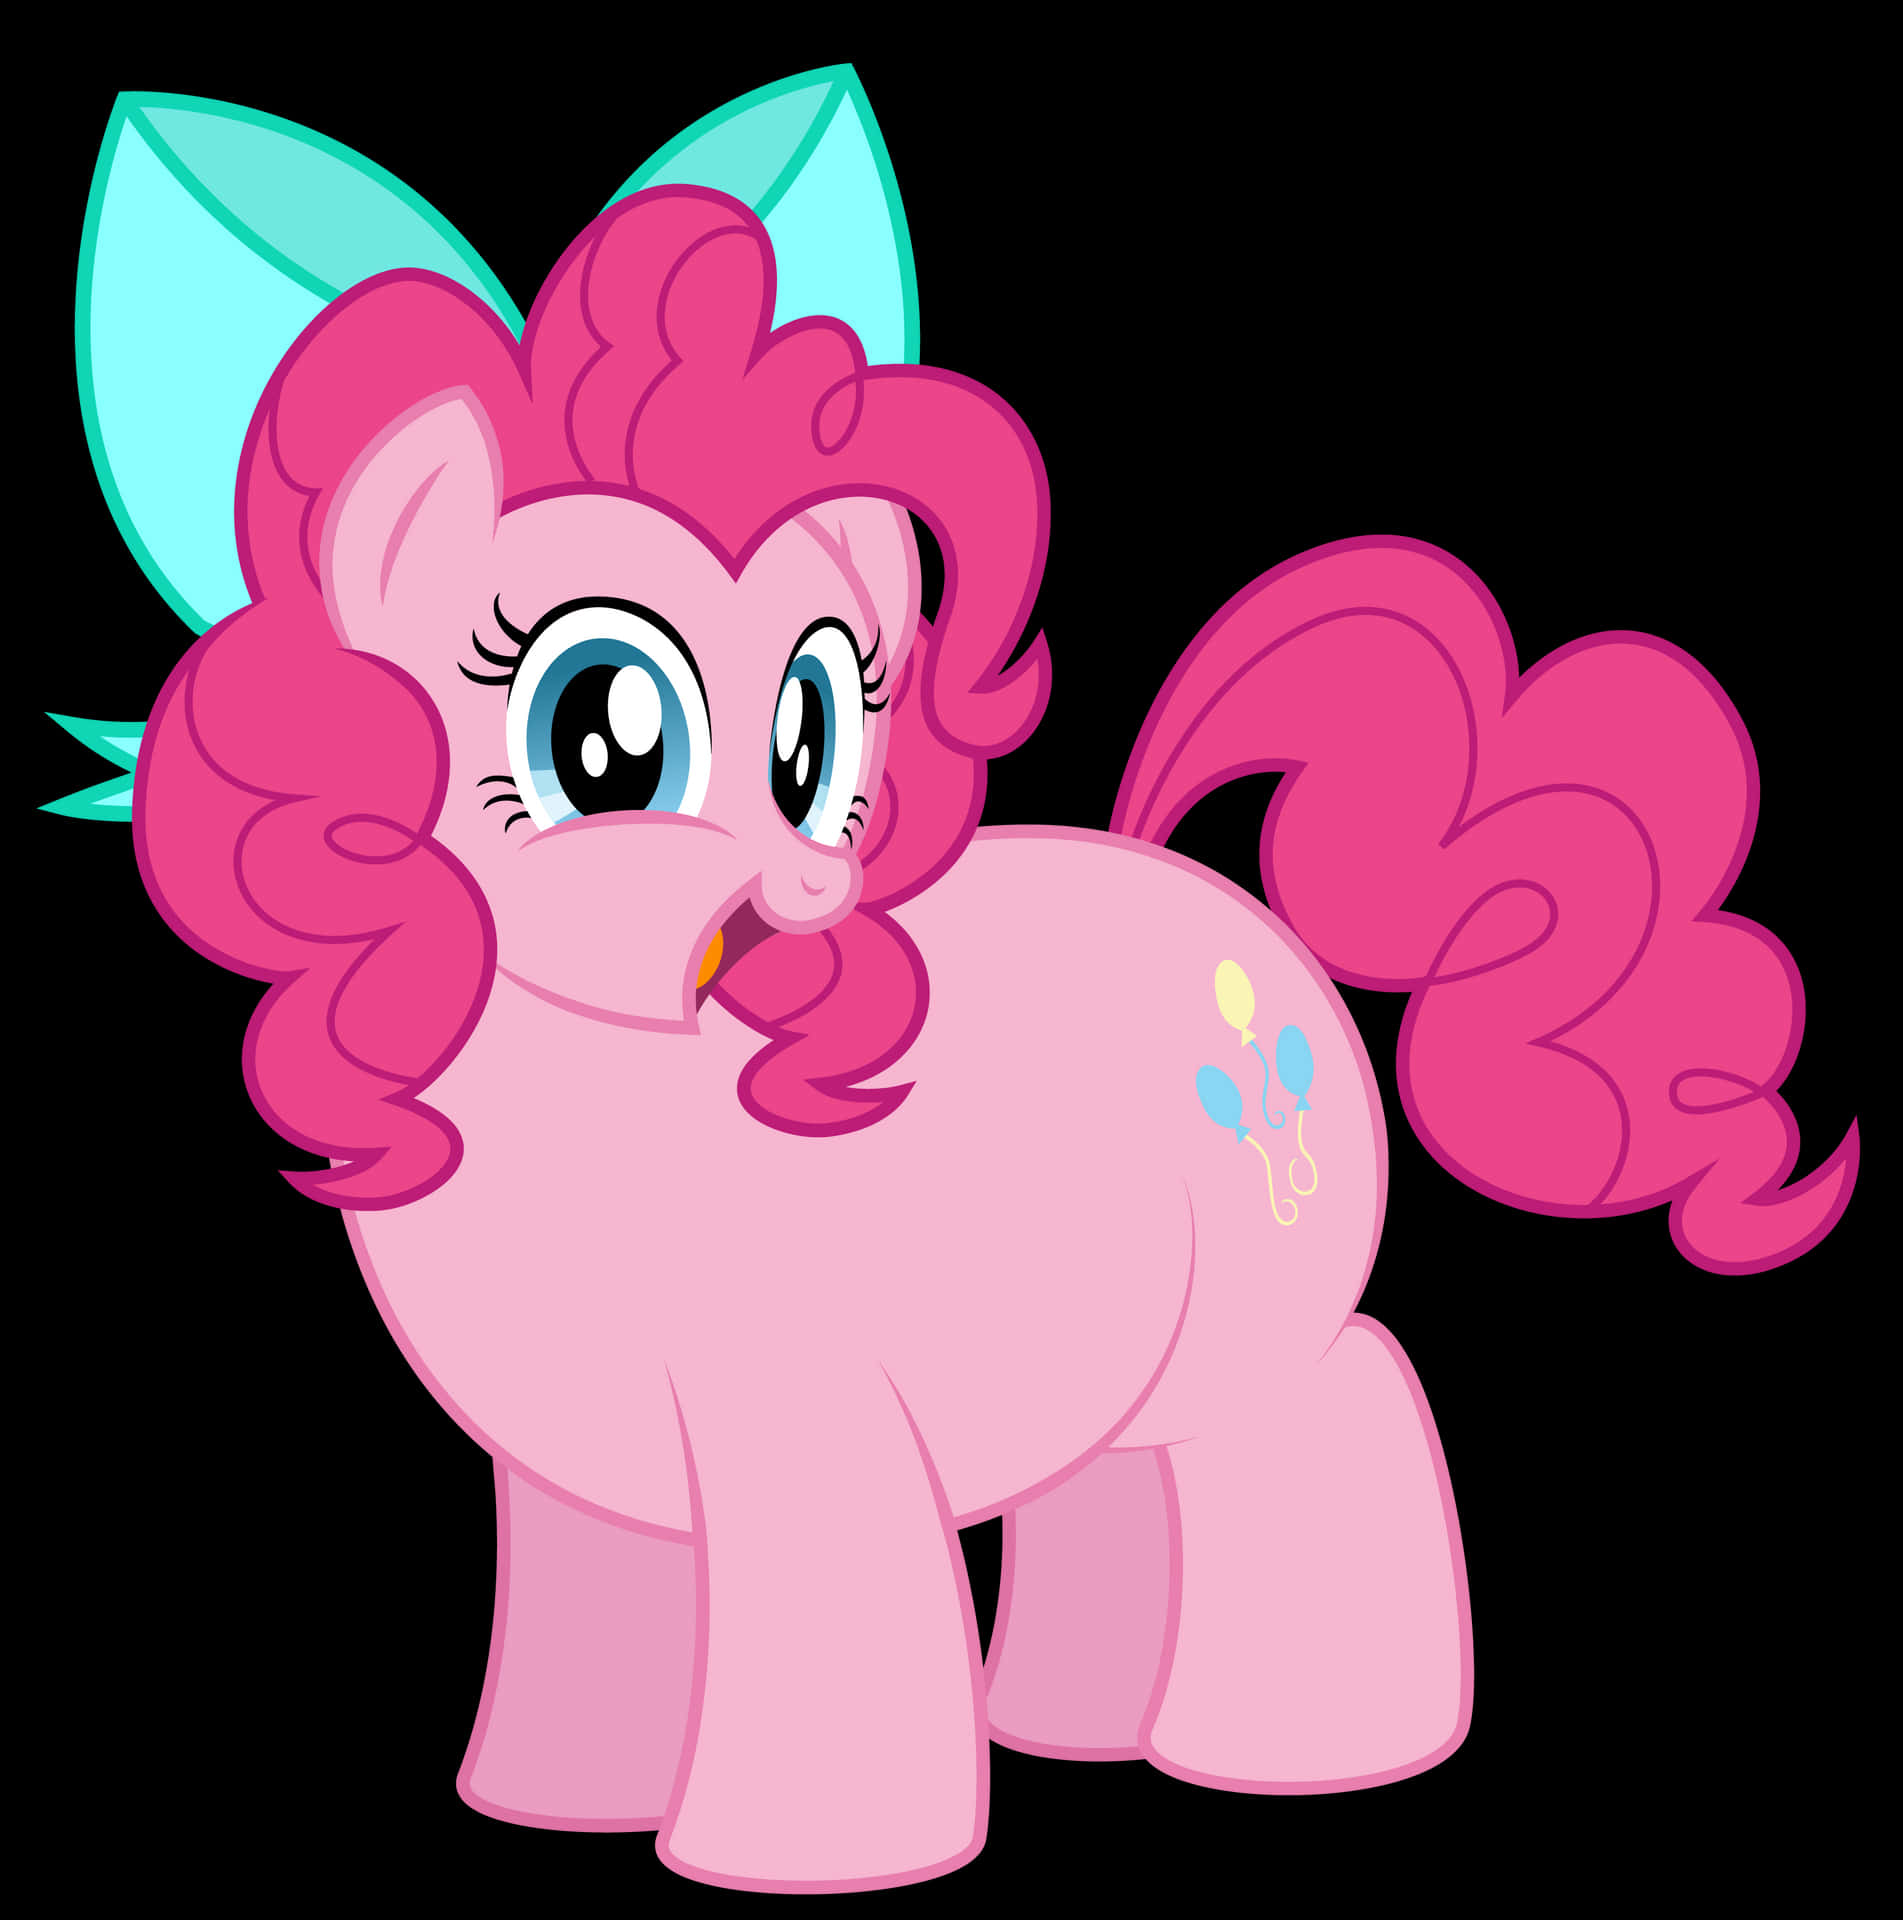 Pinkie Pie from My Little Pony, celebrating the joys of friendship!